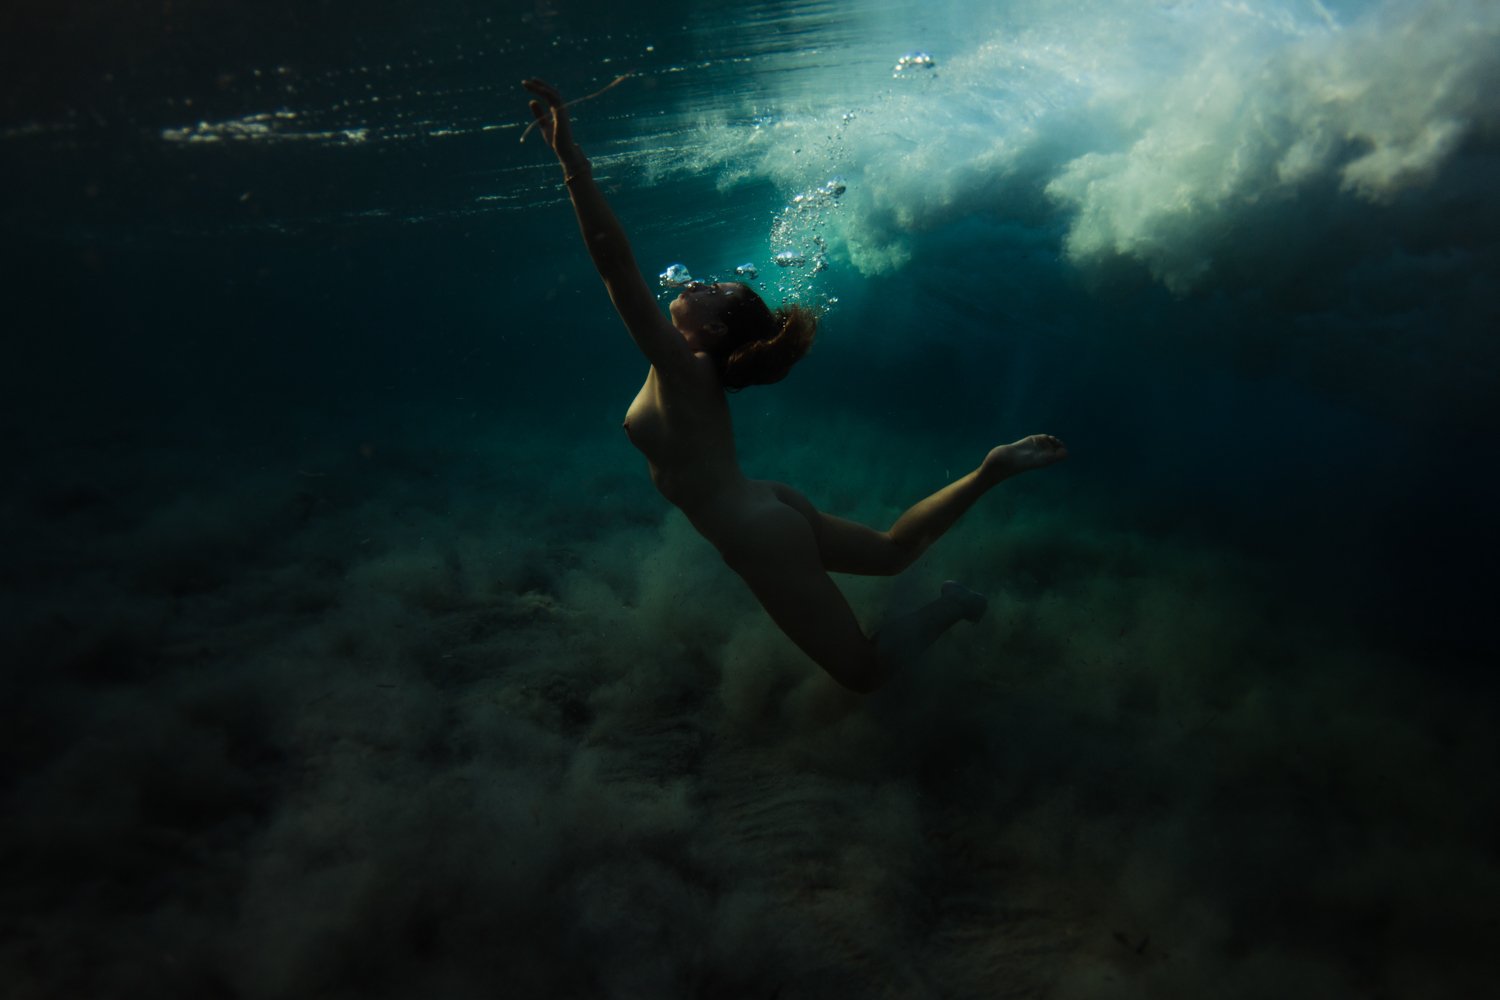 underwater corse corsica sea mediterranean island france french photographer photographe ajaccio Krista Espino Capo di feno wave nude nue femme woman fine art photography-45.jpg